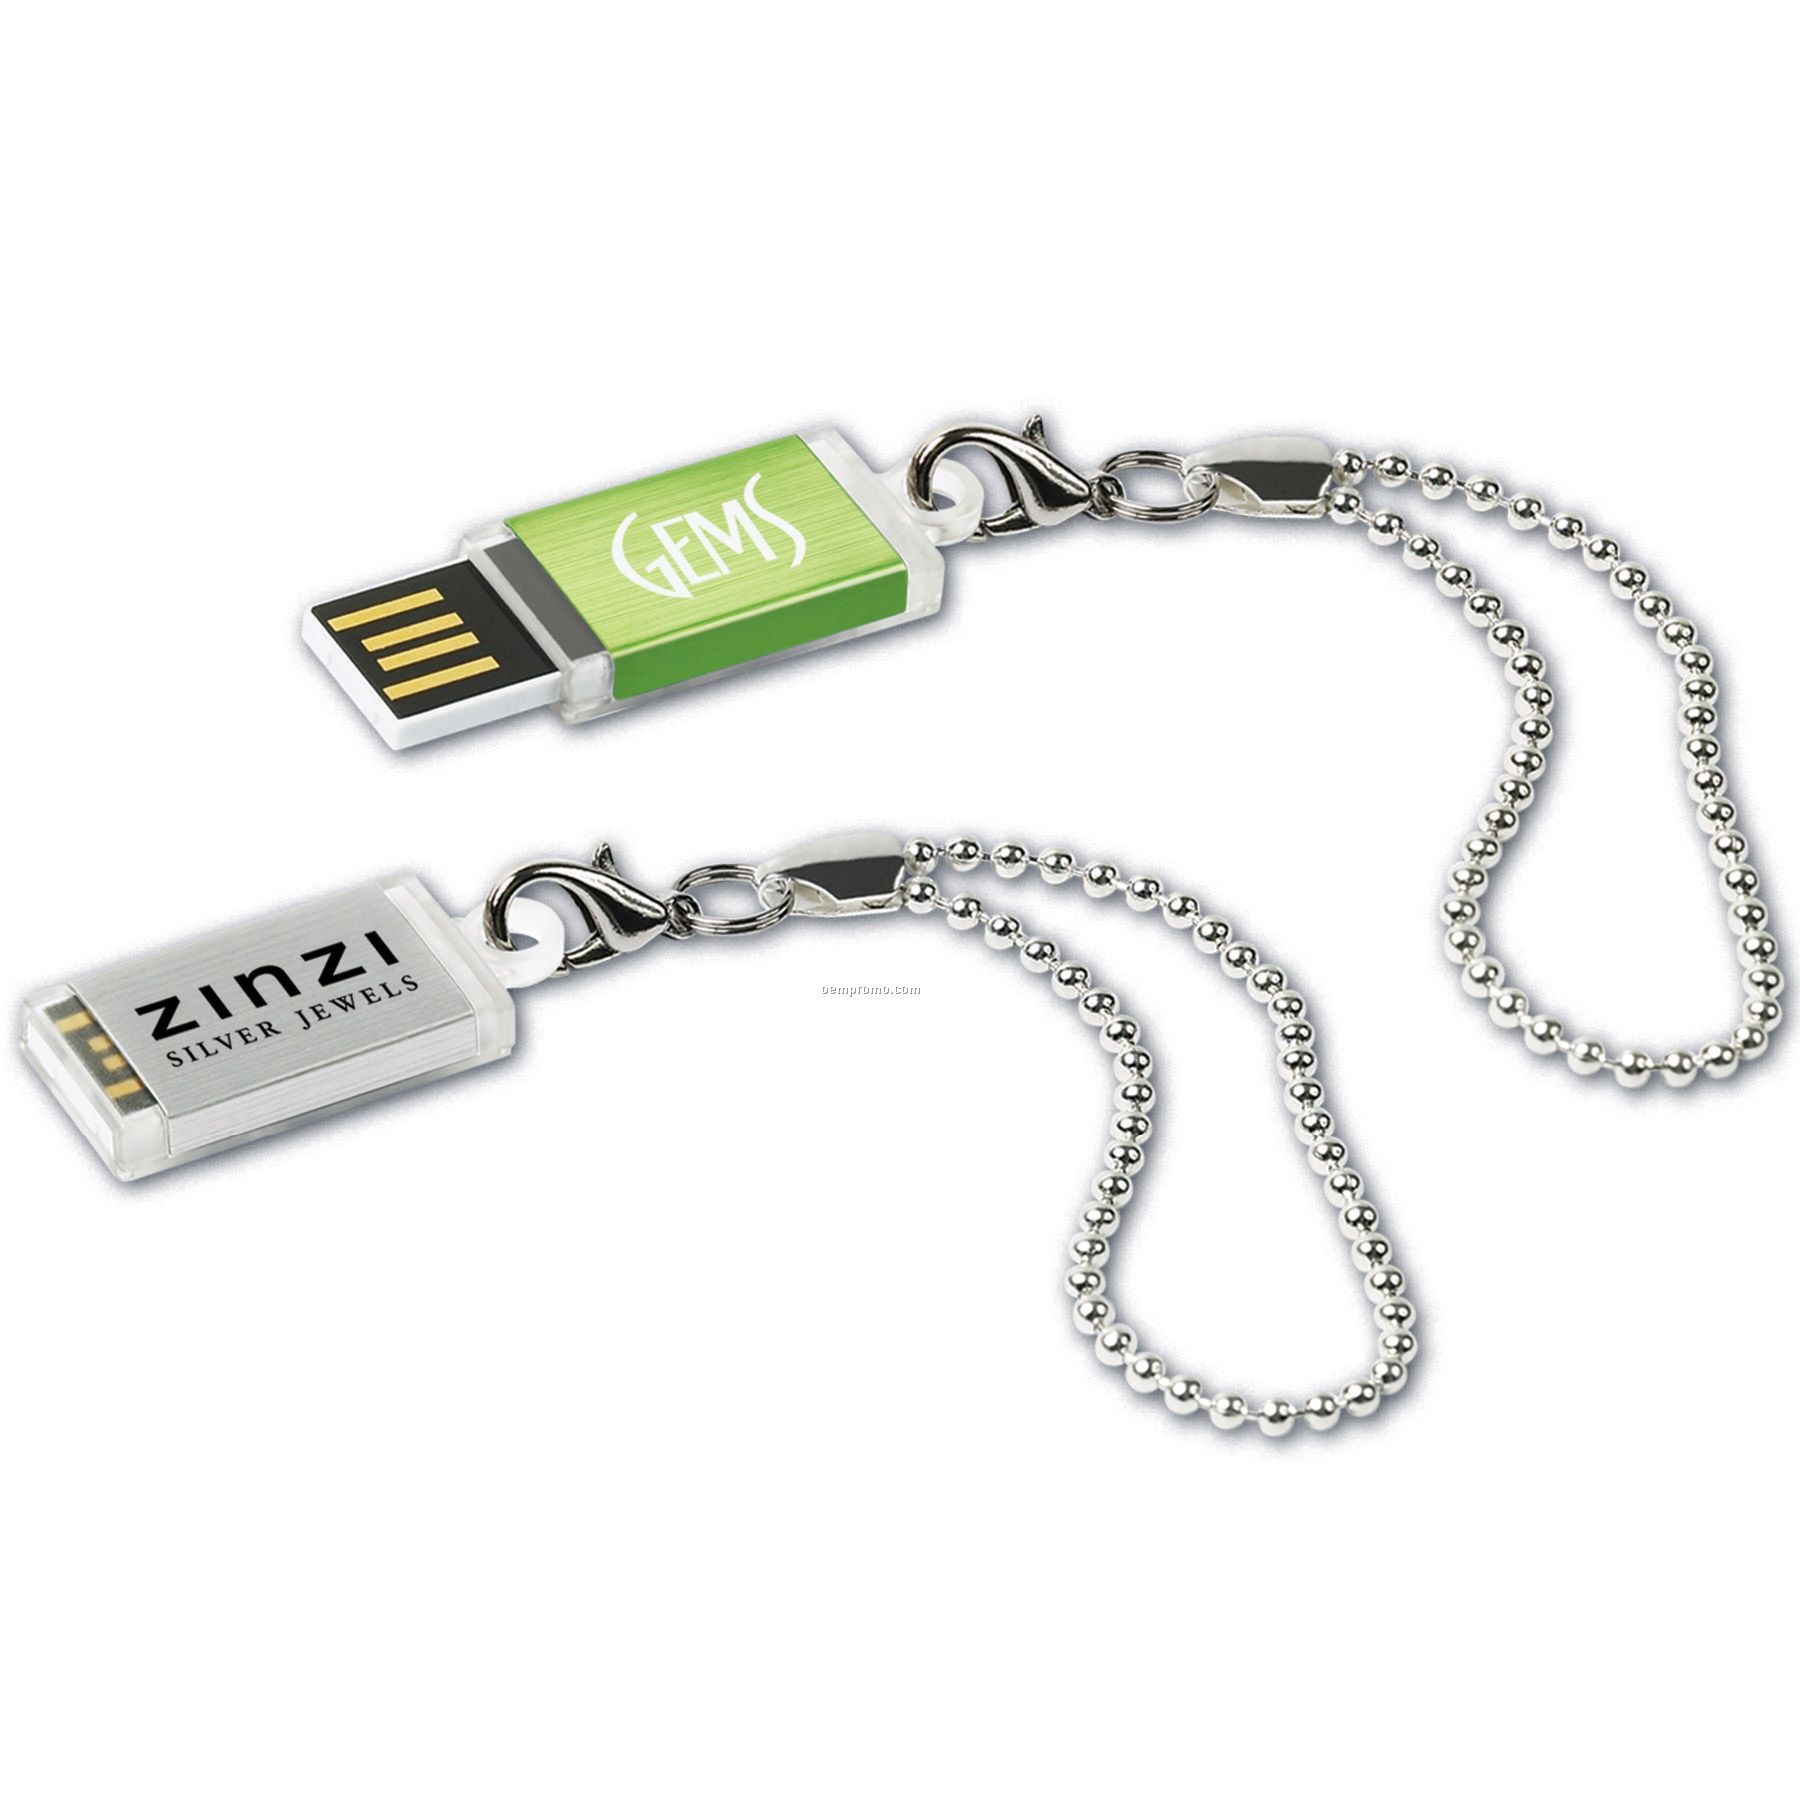 USB 2.0 Charm Flash Drive Lc